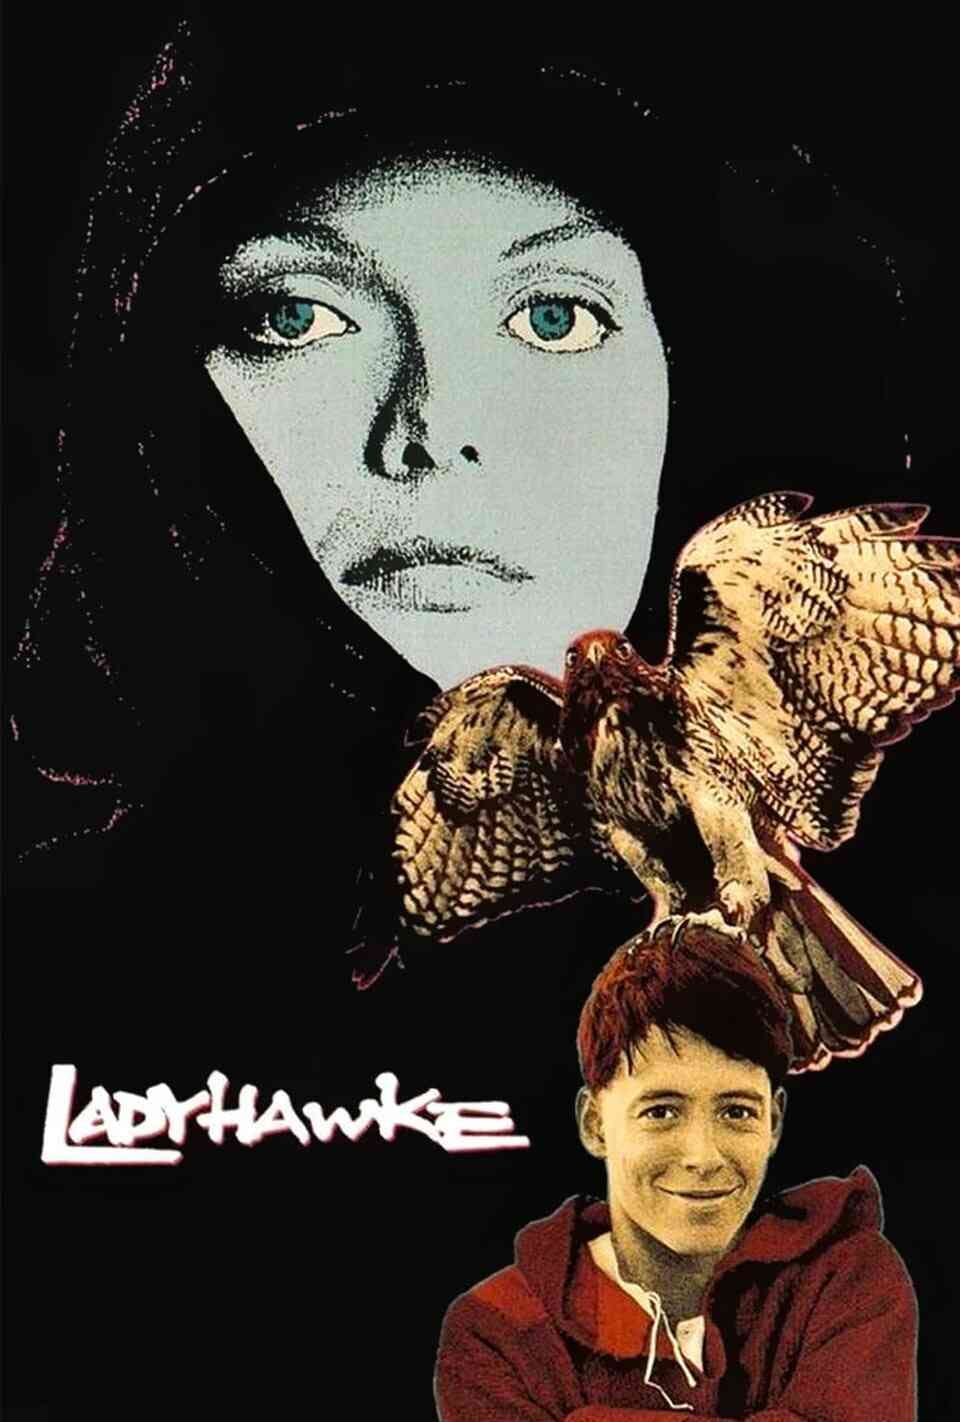 Read Ladyhawke screenplay (poster)